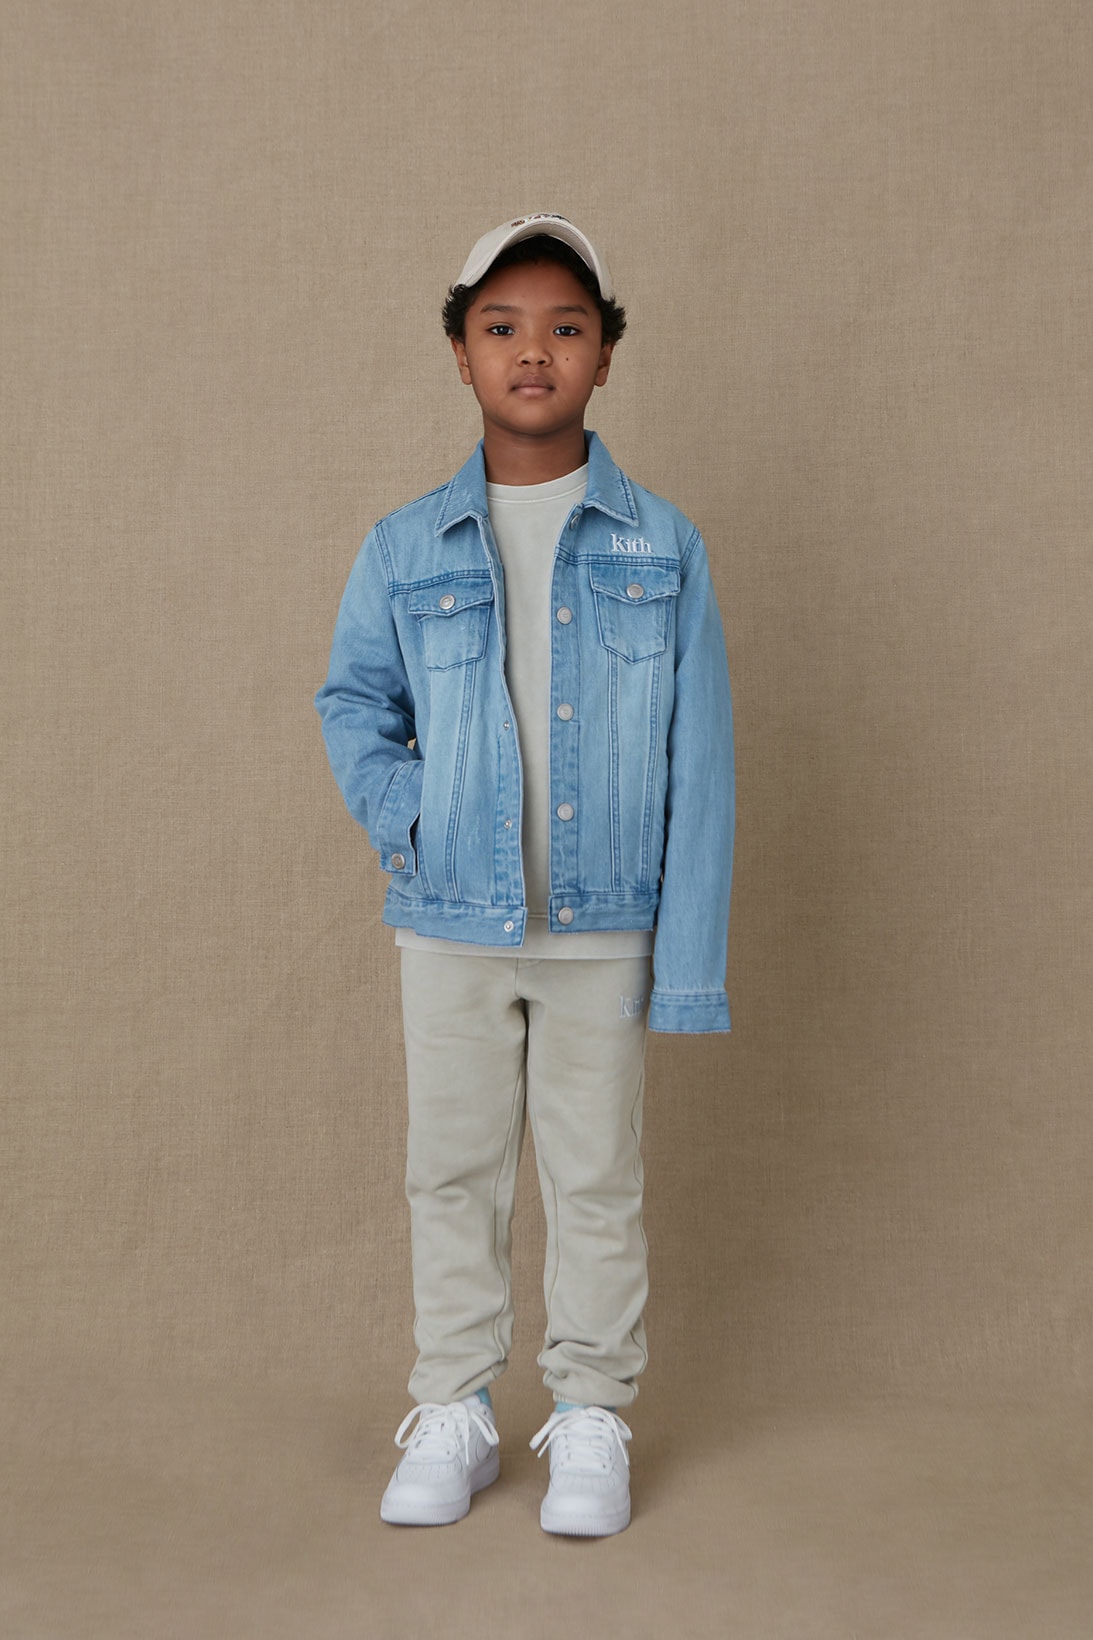 kith kids spring 2021 collection lookbook boy denim jacket beige pants